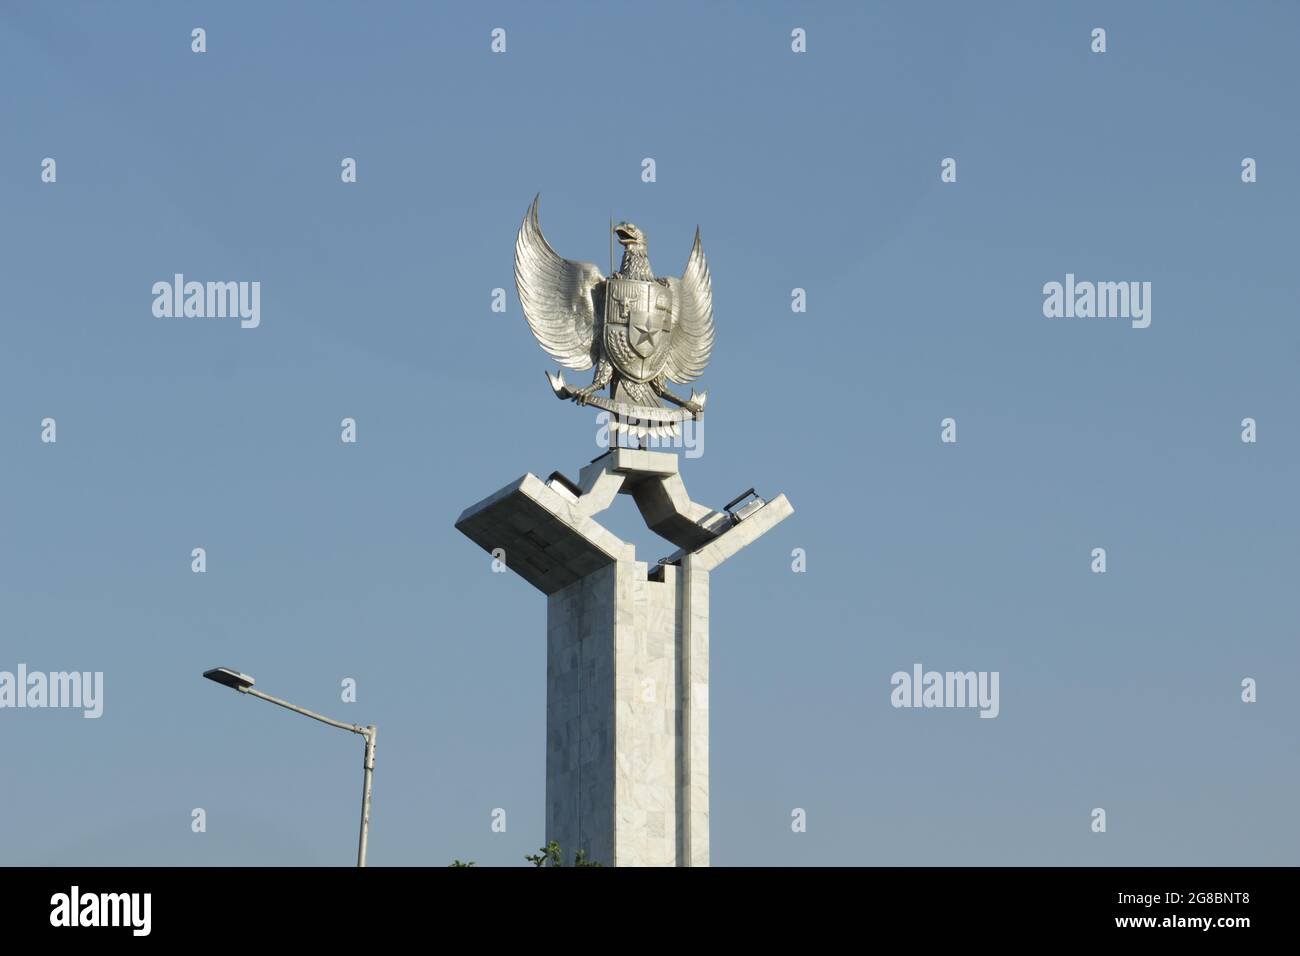 Garuda Pancasila Monument, the symbol of Indonesia. Stock Photo